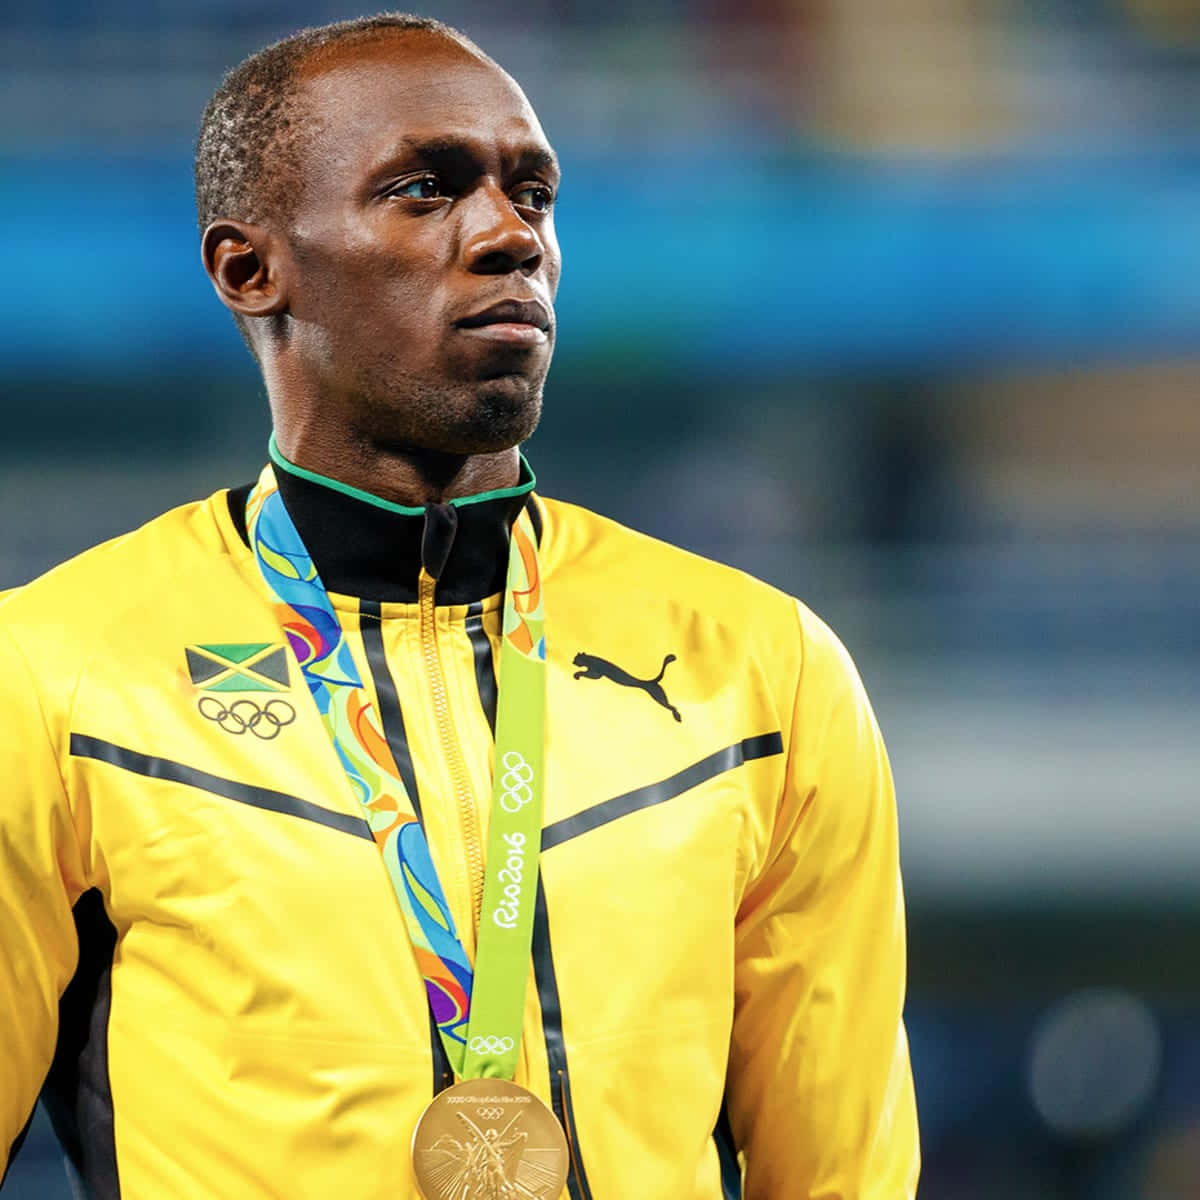 Derjamaikanische Athlet Usain Bolt Wirkt Entschlossen. Wallpaper